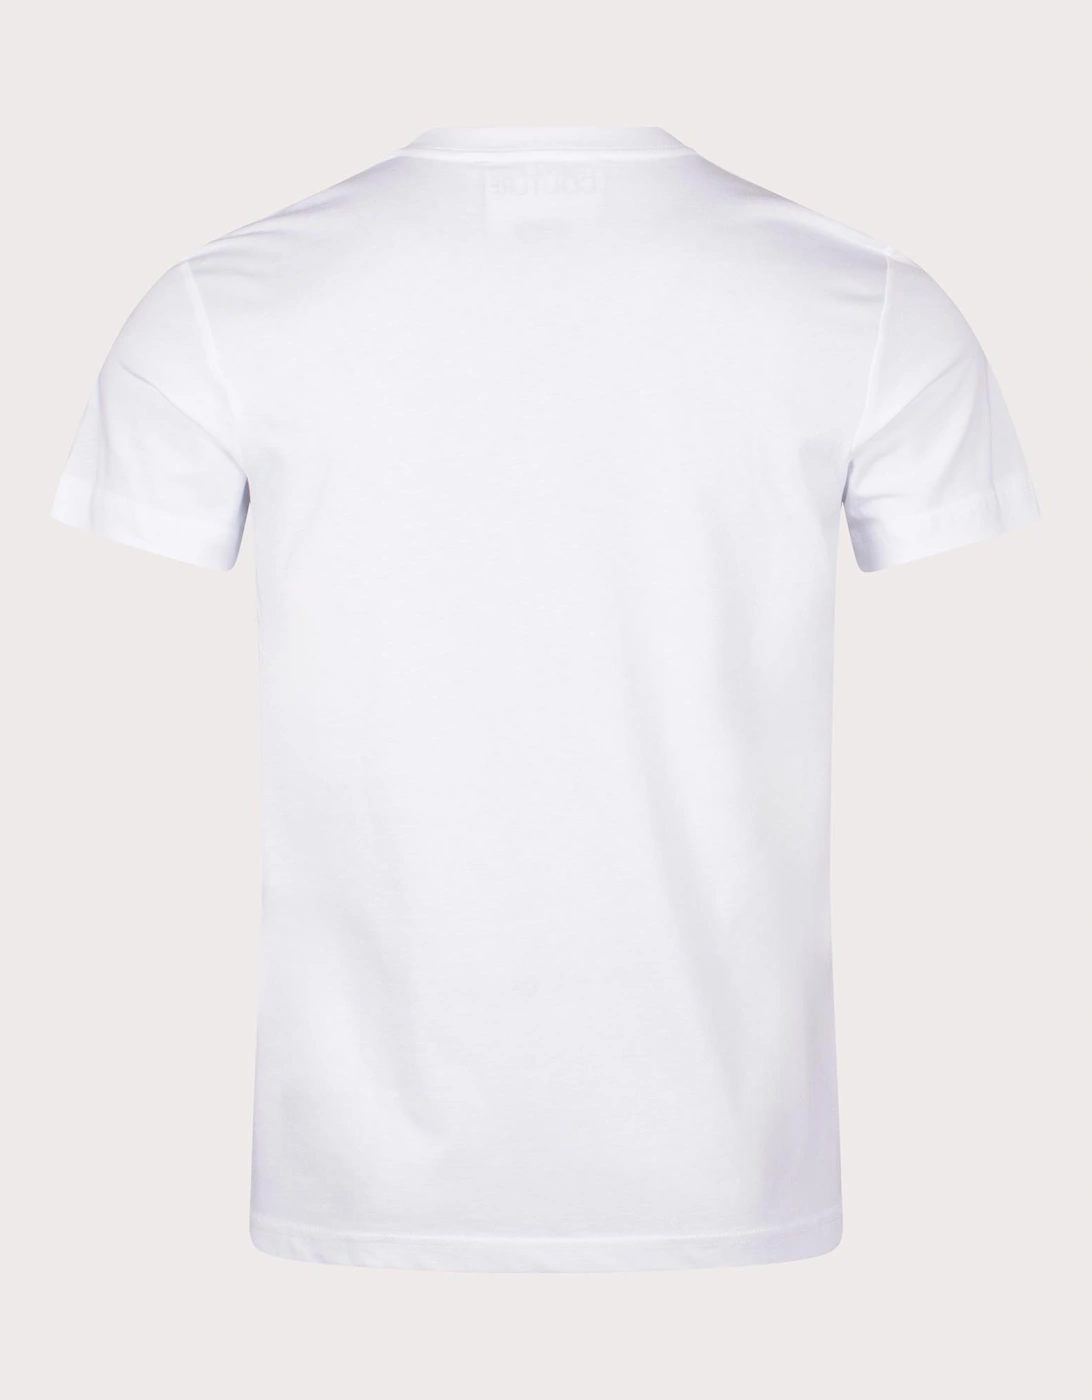 S V Emblem T.Foil T-Shirt